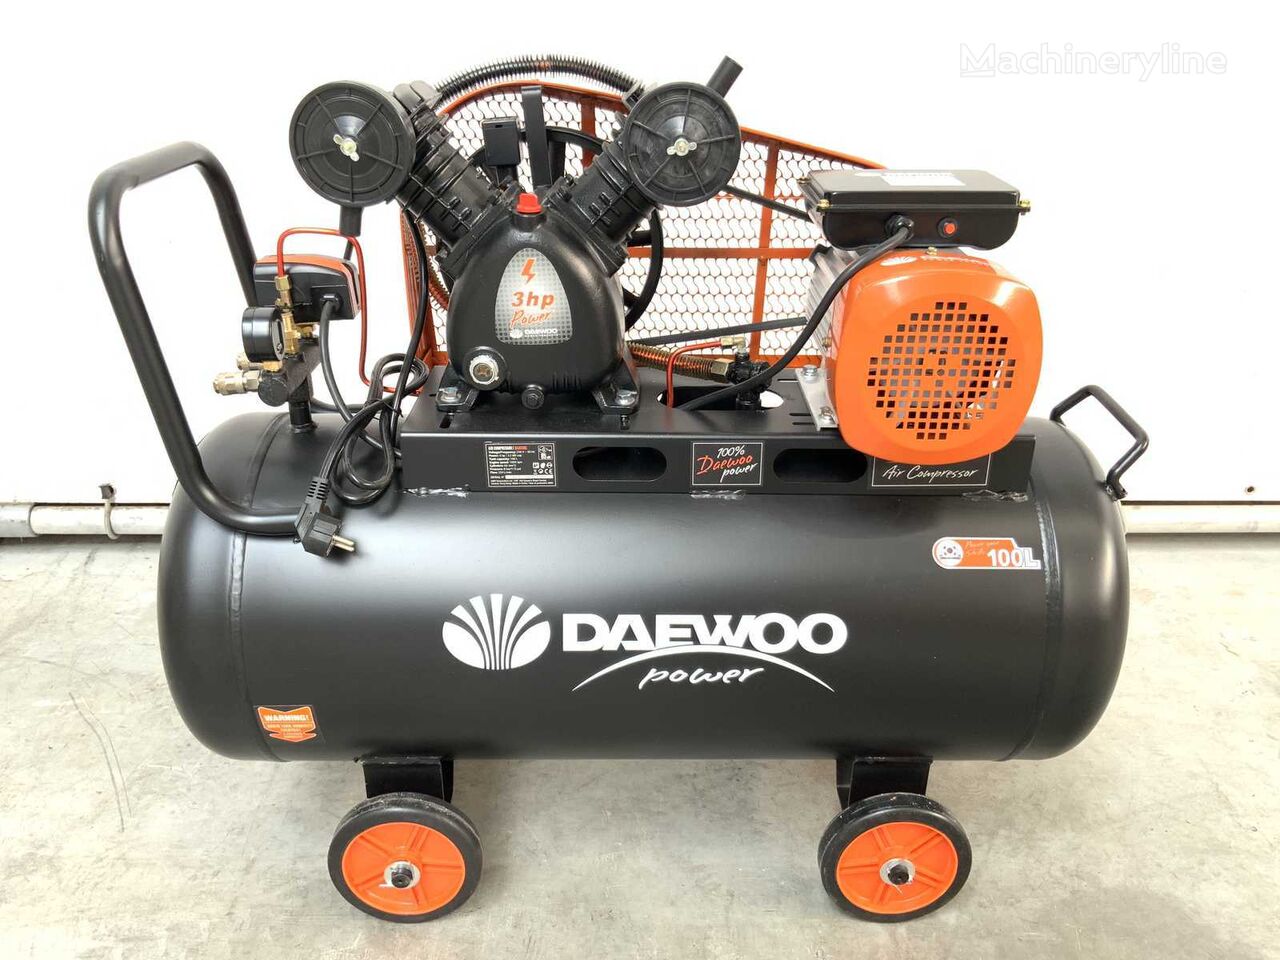 Daewoo DAAX100L compresor portátil